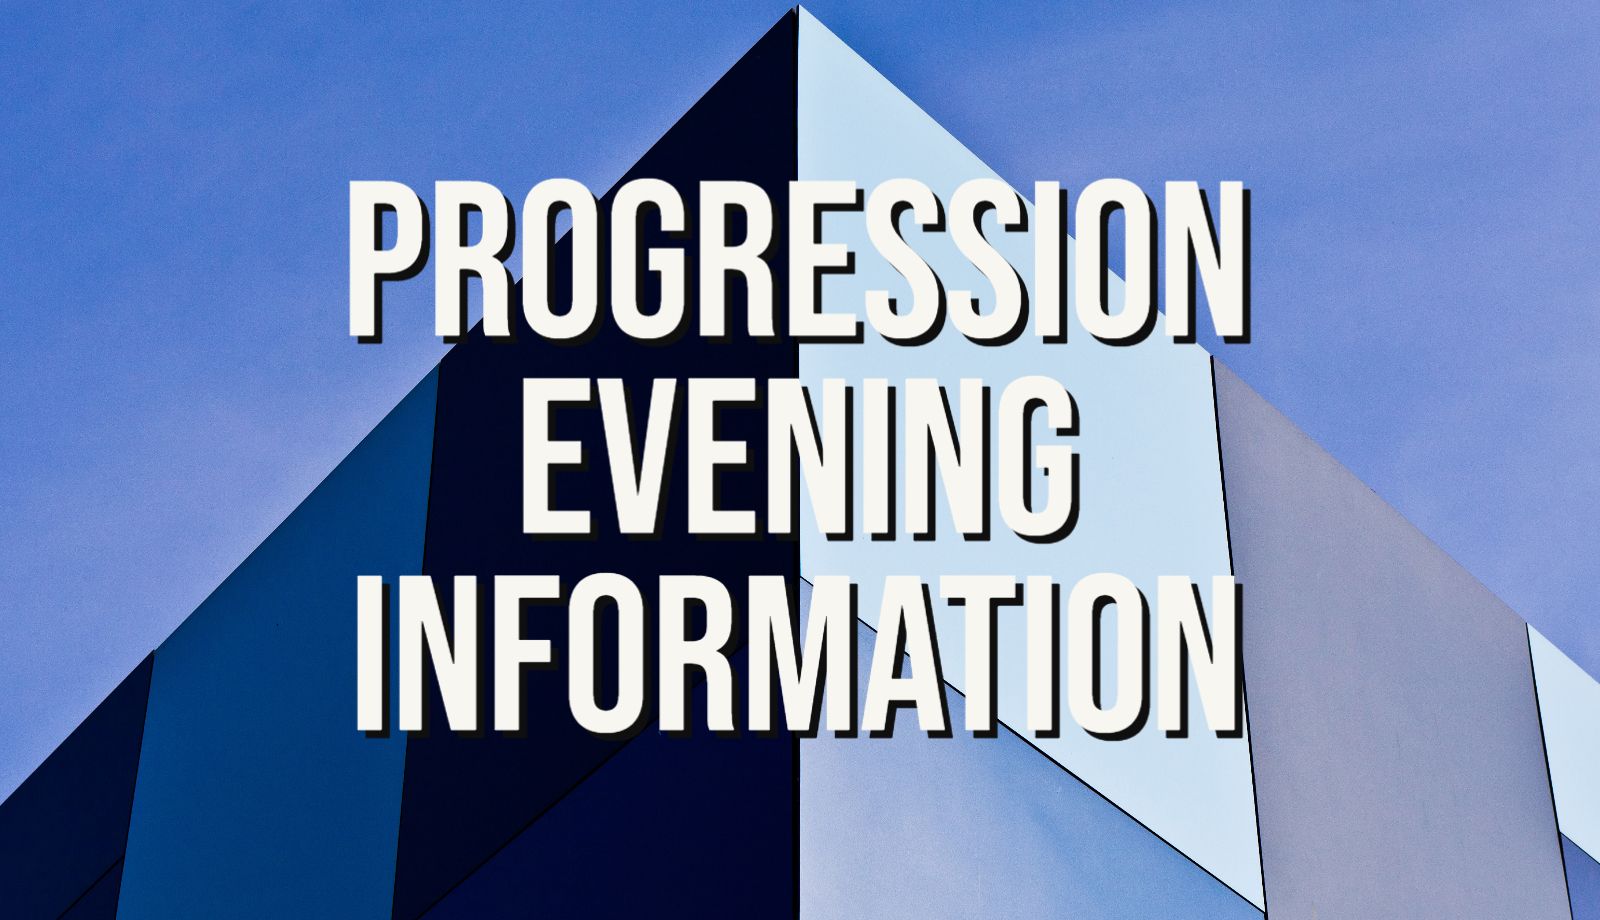 Progression Evening Information